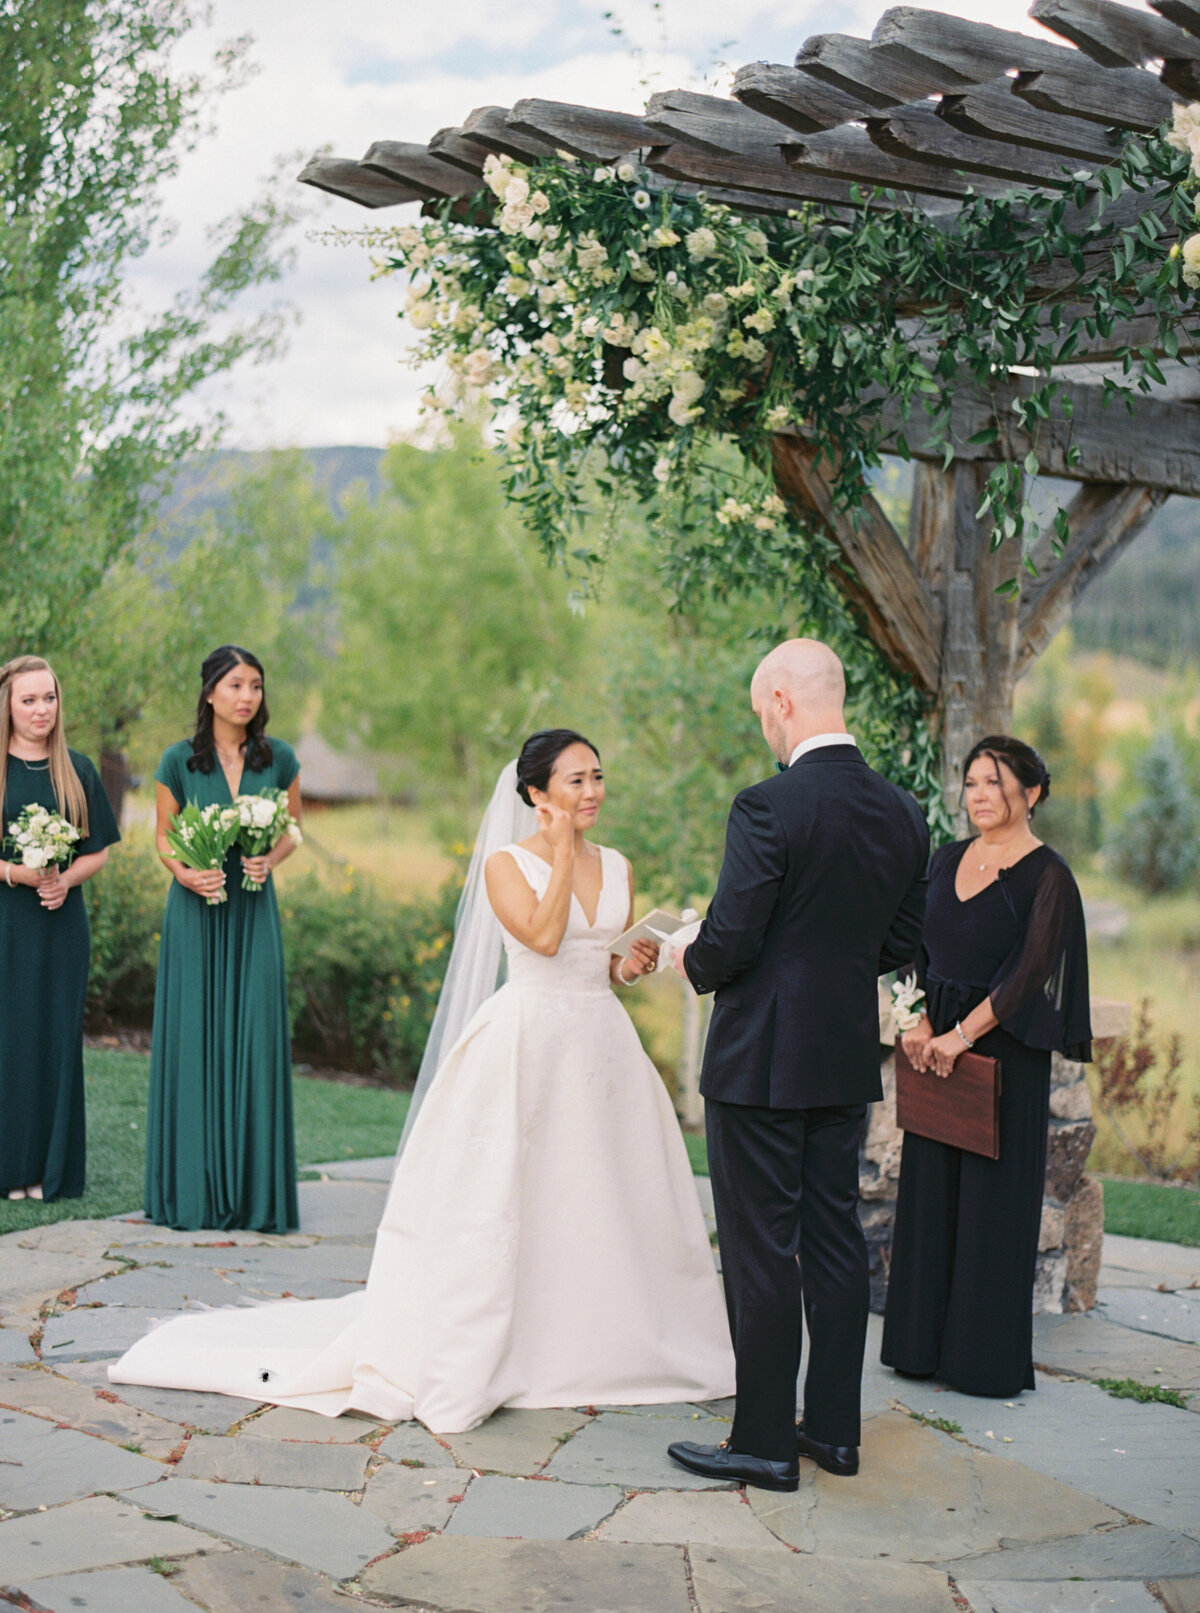 Ceremony vows at Montana wedding